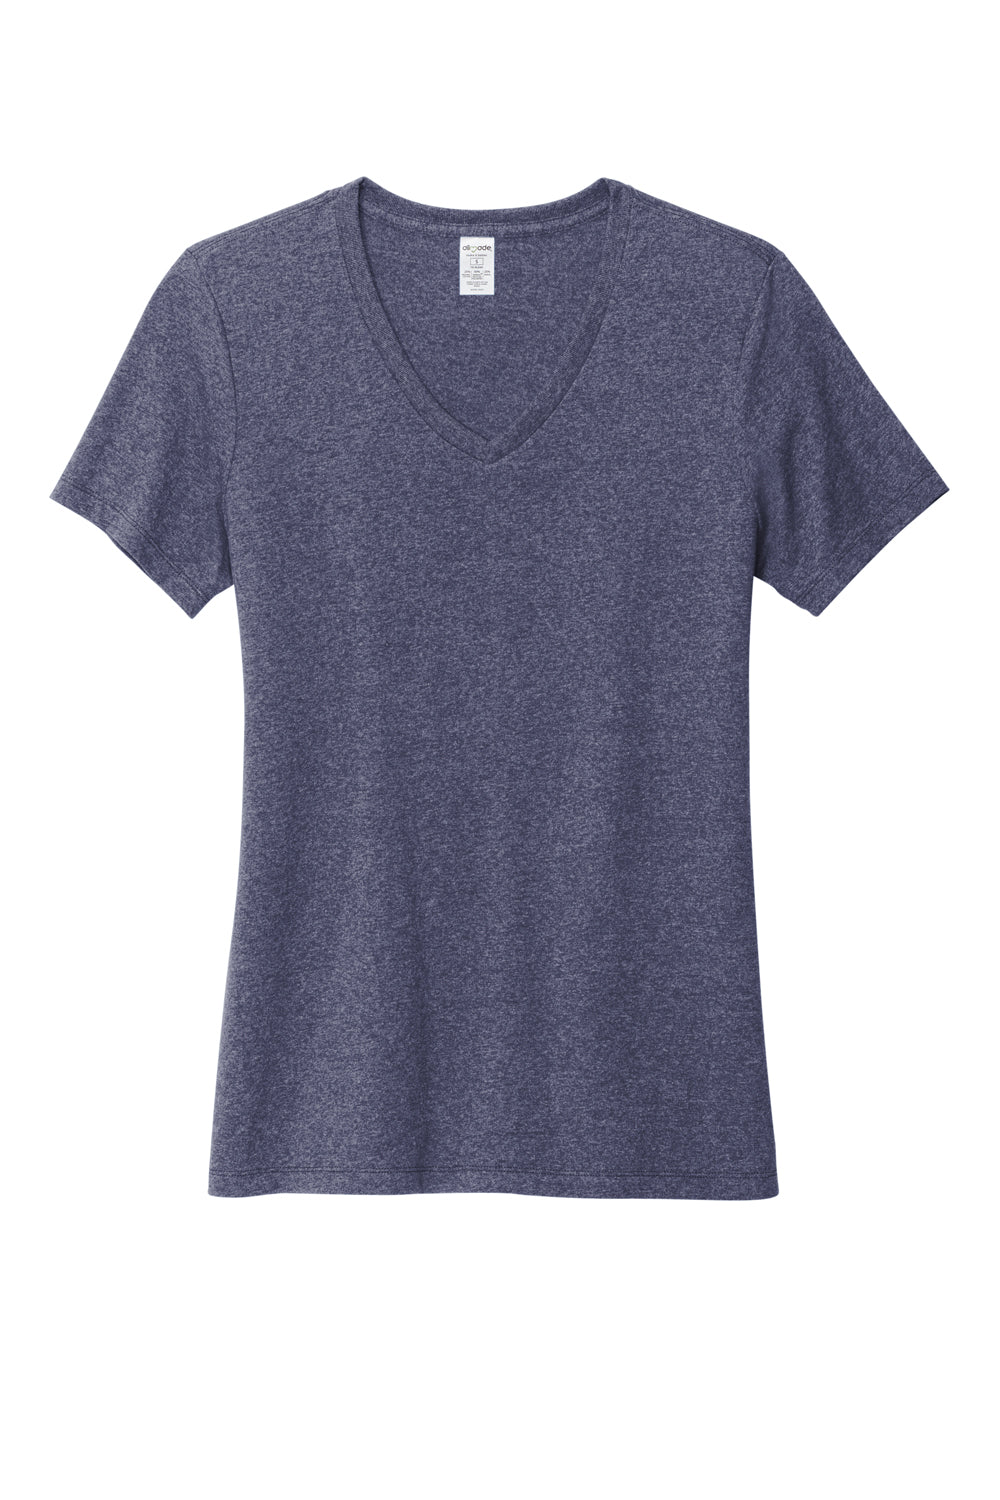 Allmade AL2303 Womens Recycled Short Sleeve V-Neck T-Shirt Heather Navy Blue Flat Front